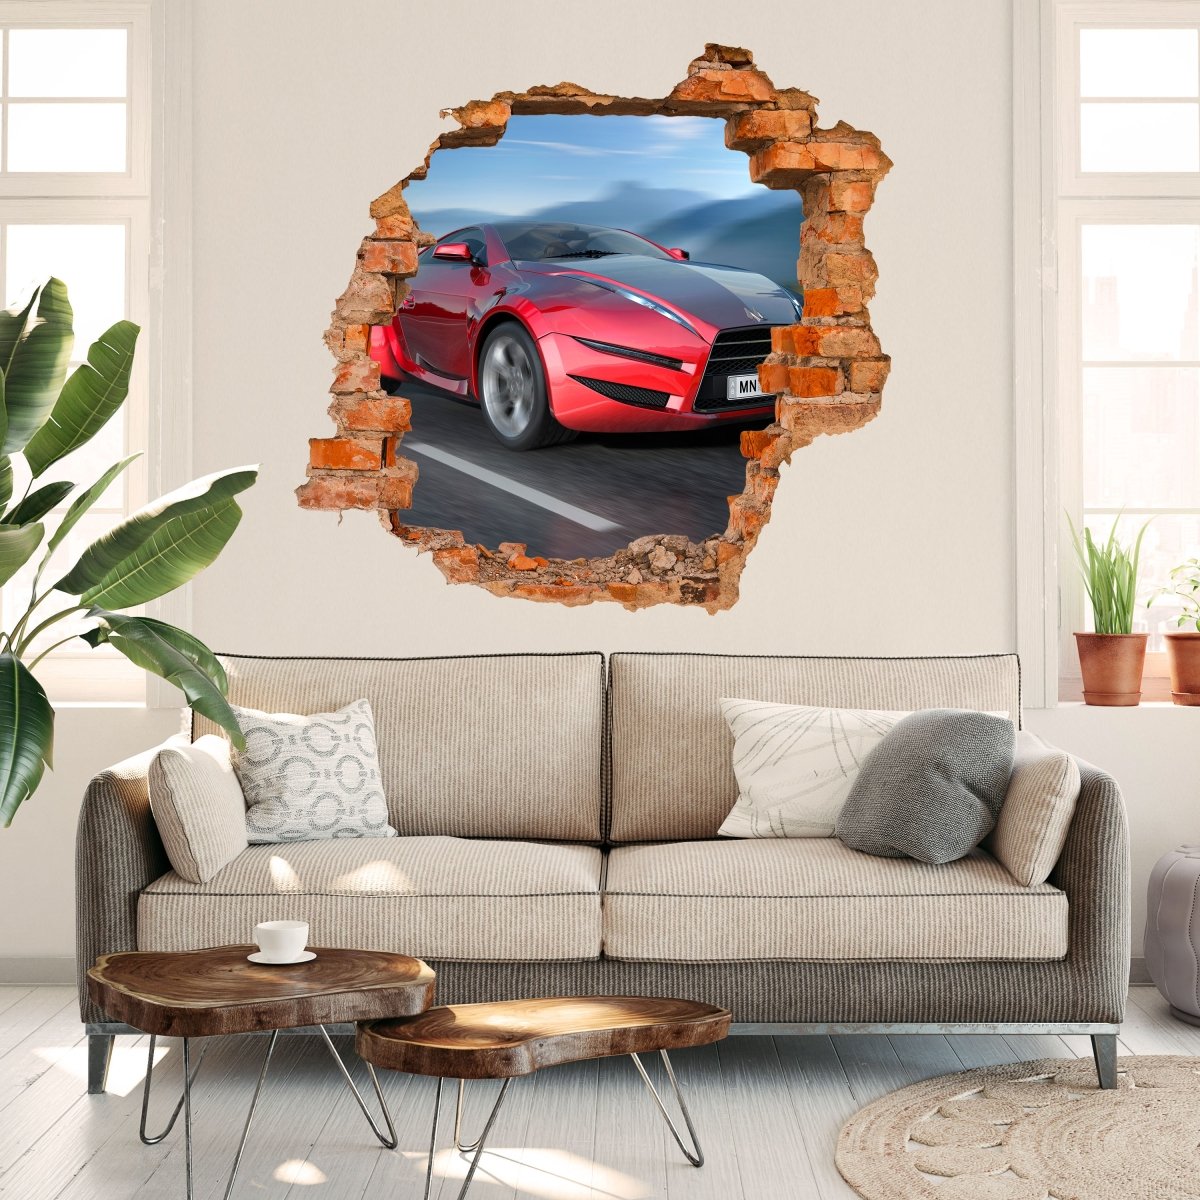 3D Wall Sticker Driving Sports Car - Wall Decal M0332